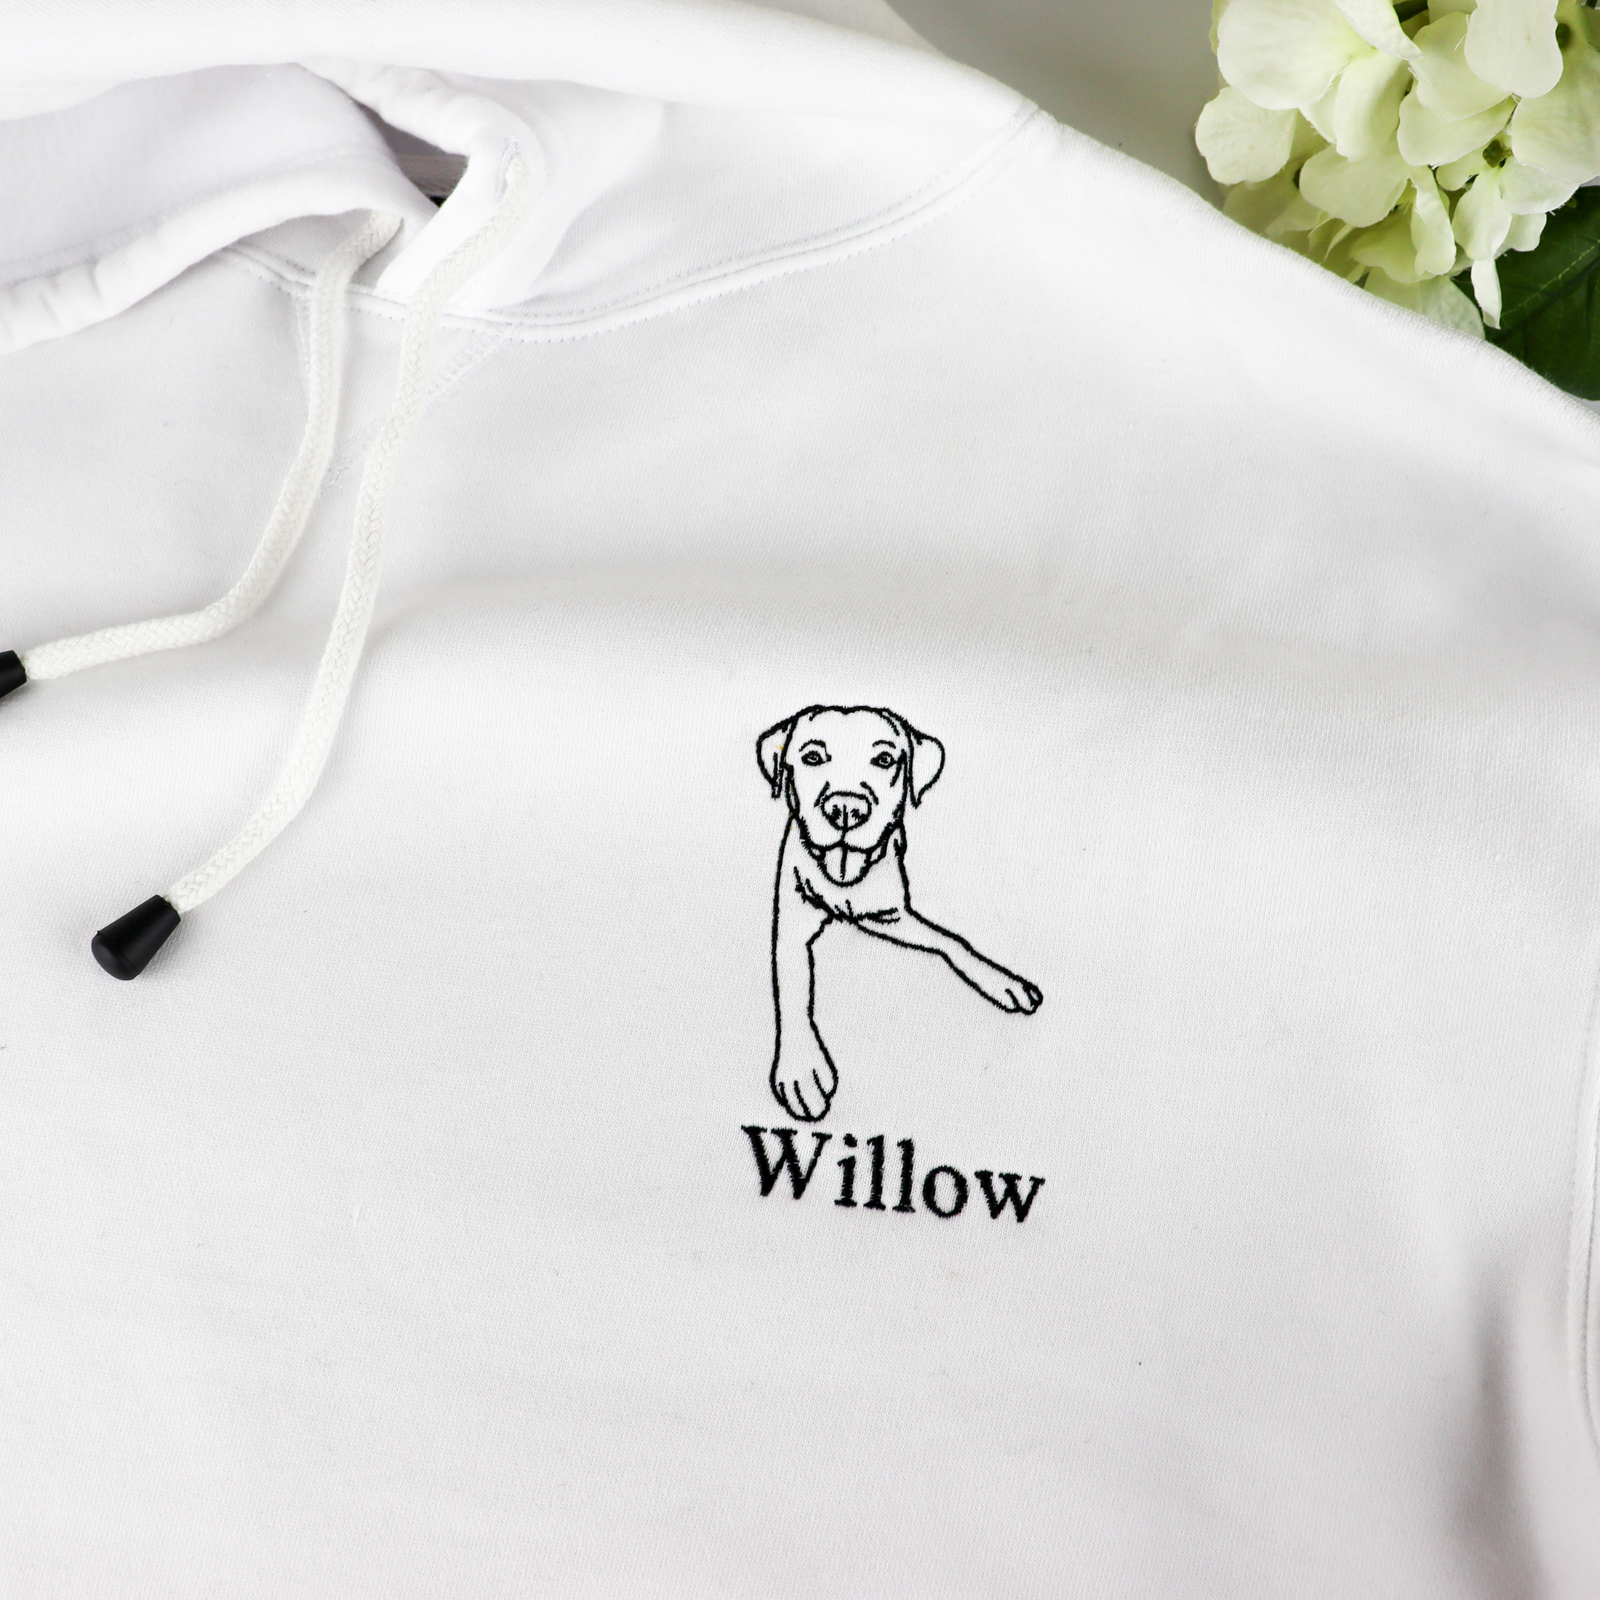 Personalised embroidered pet hoodie